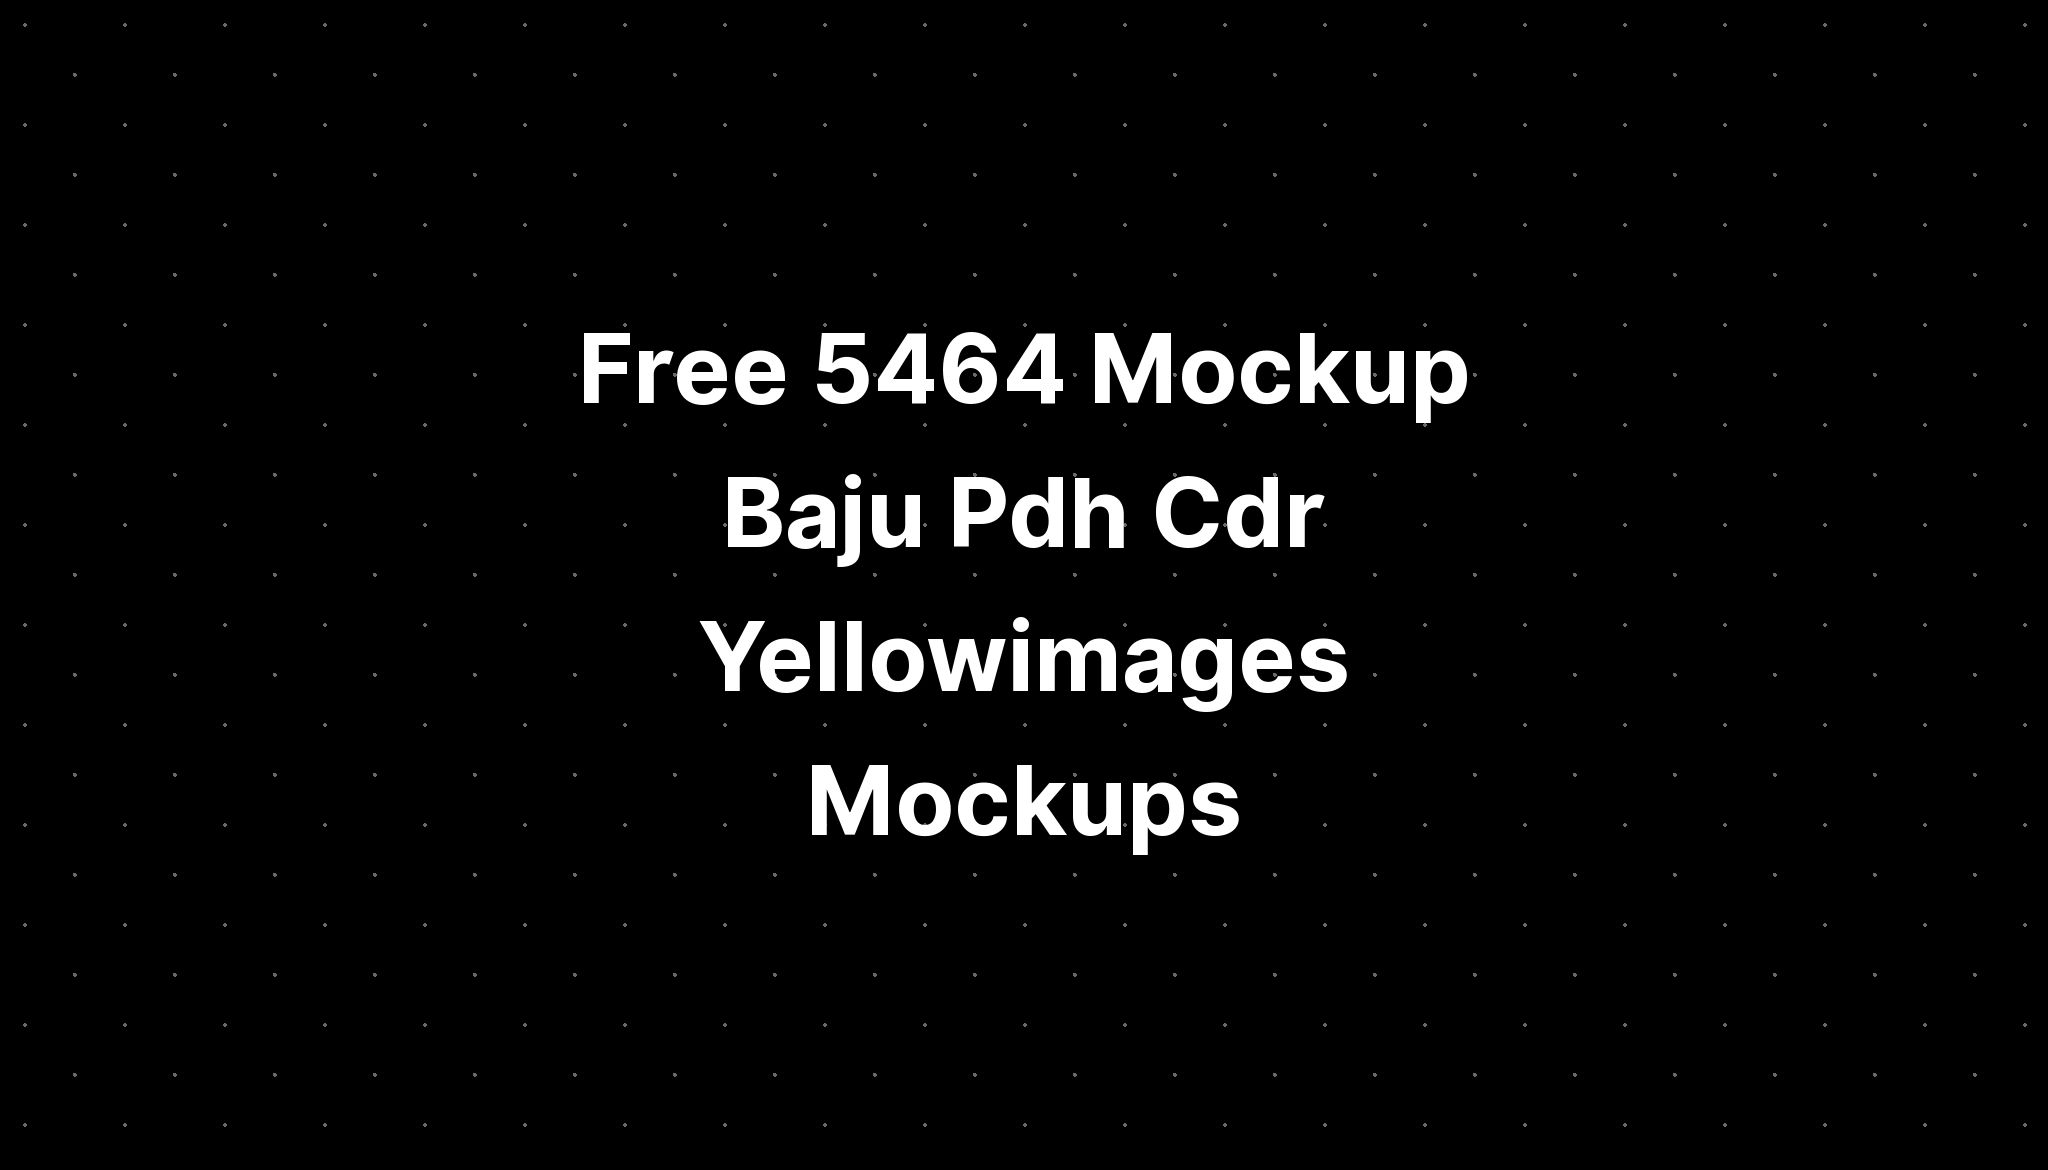 Free Mockup Baju Pdh Cdr Yellowimages Mockups Imagesee